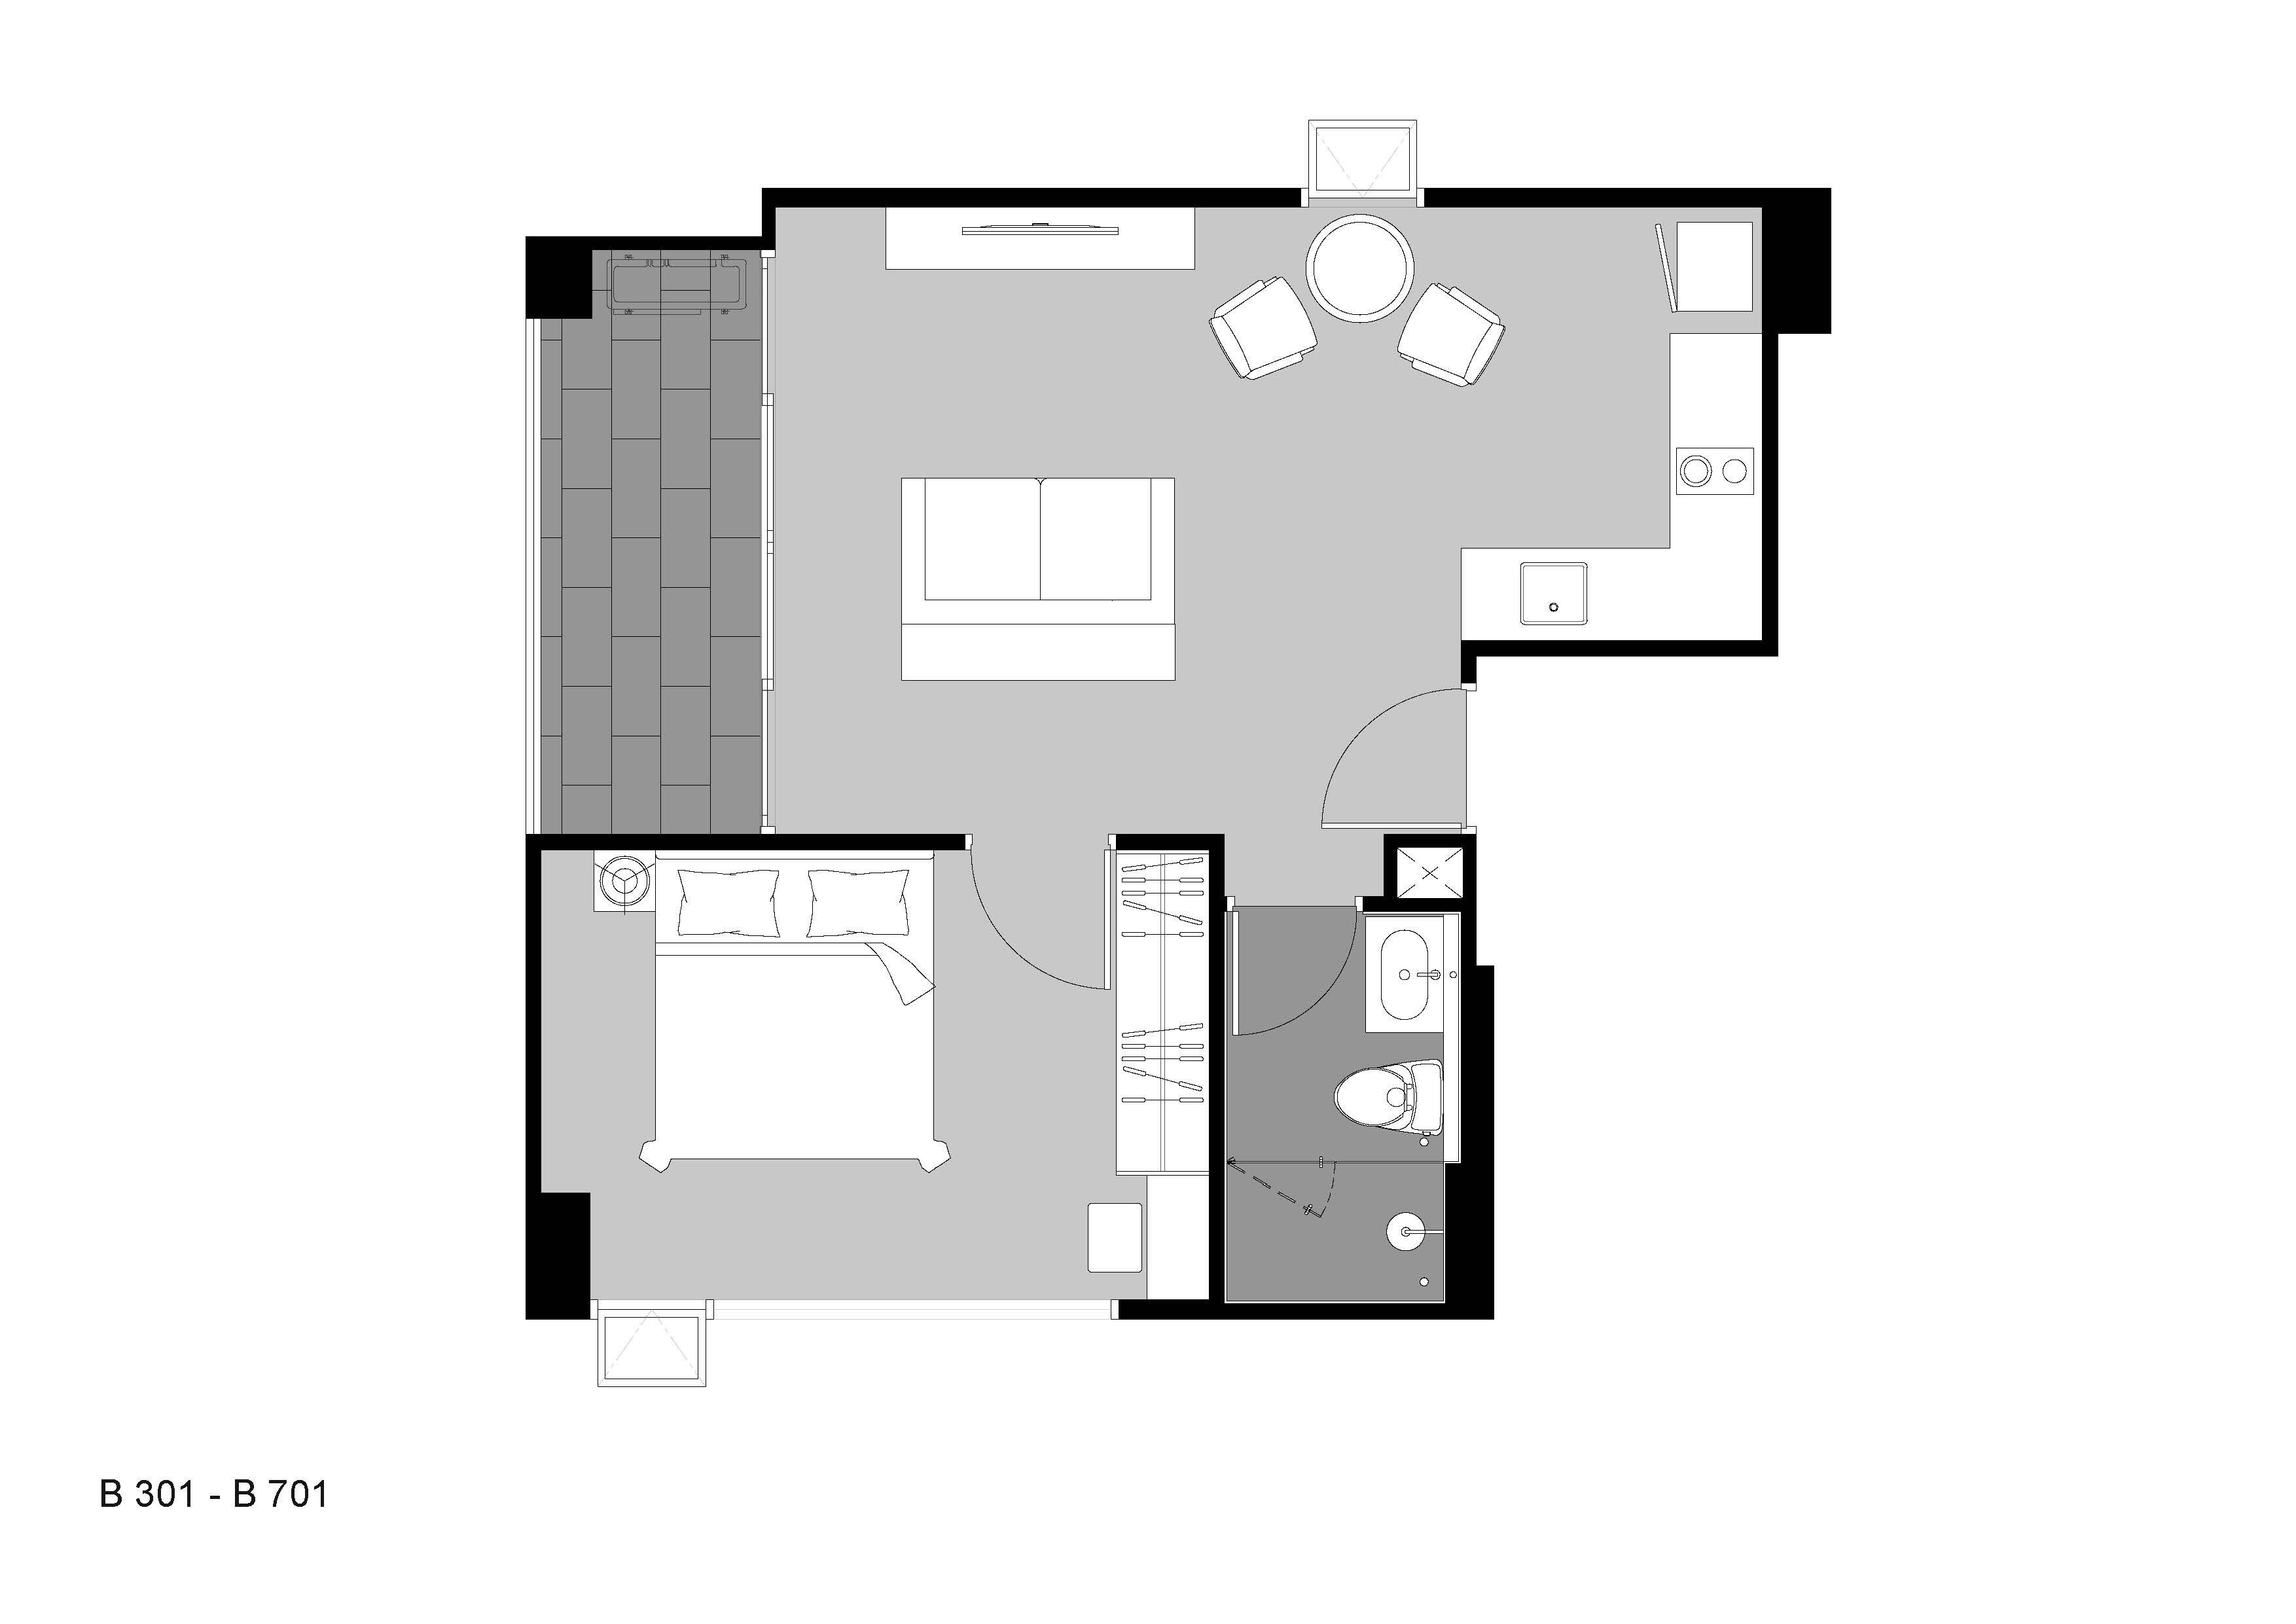 images/floorplan/B203-B703.jpg#joomlaImage://local-images/floorplan/B203-B703.jpg?width=3508&height=2481